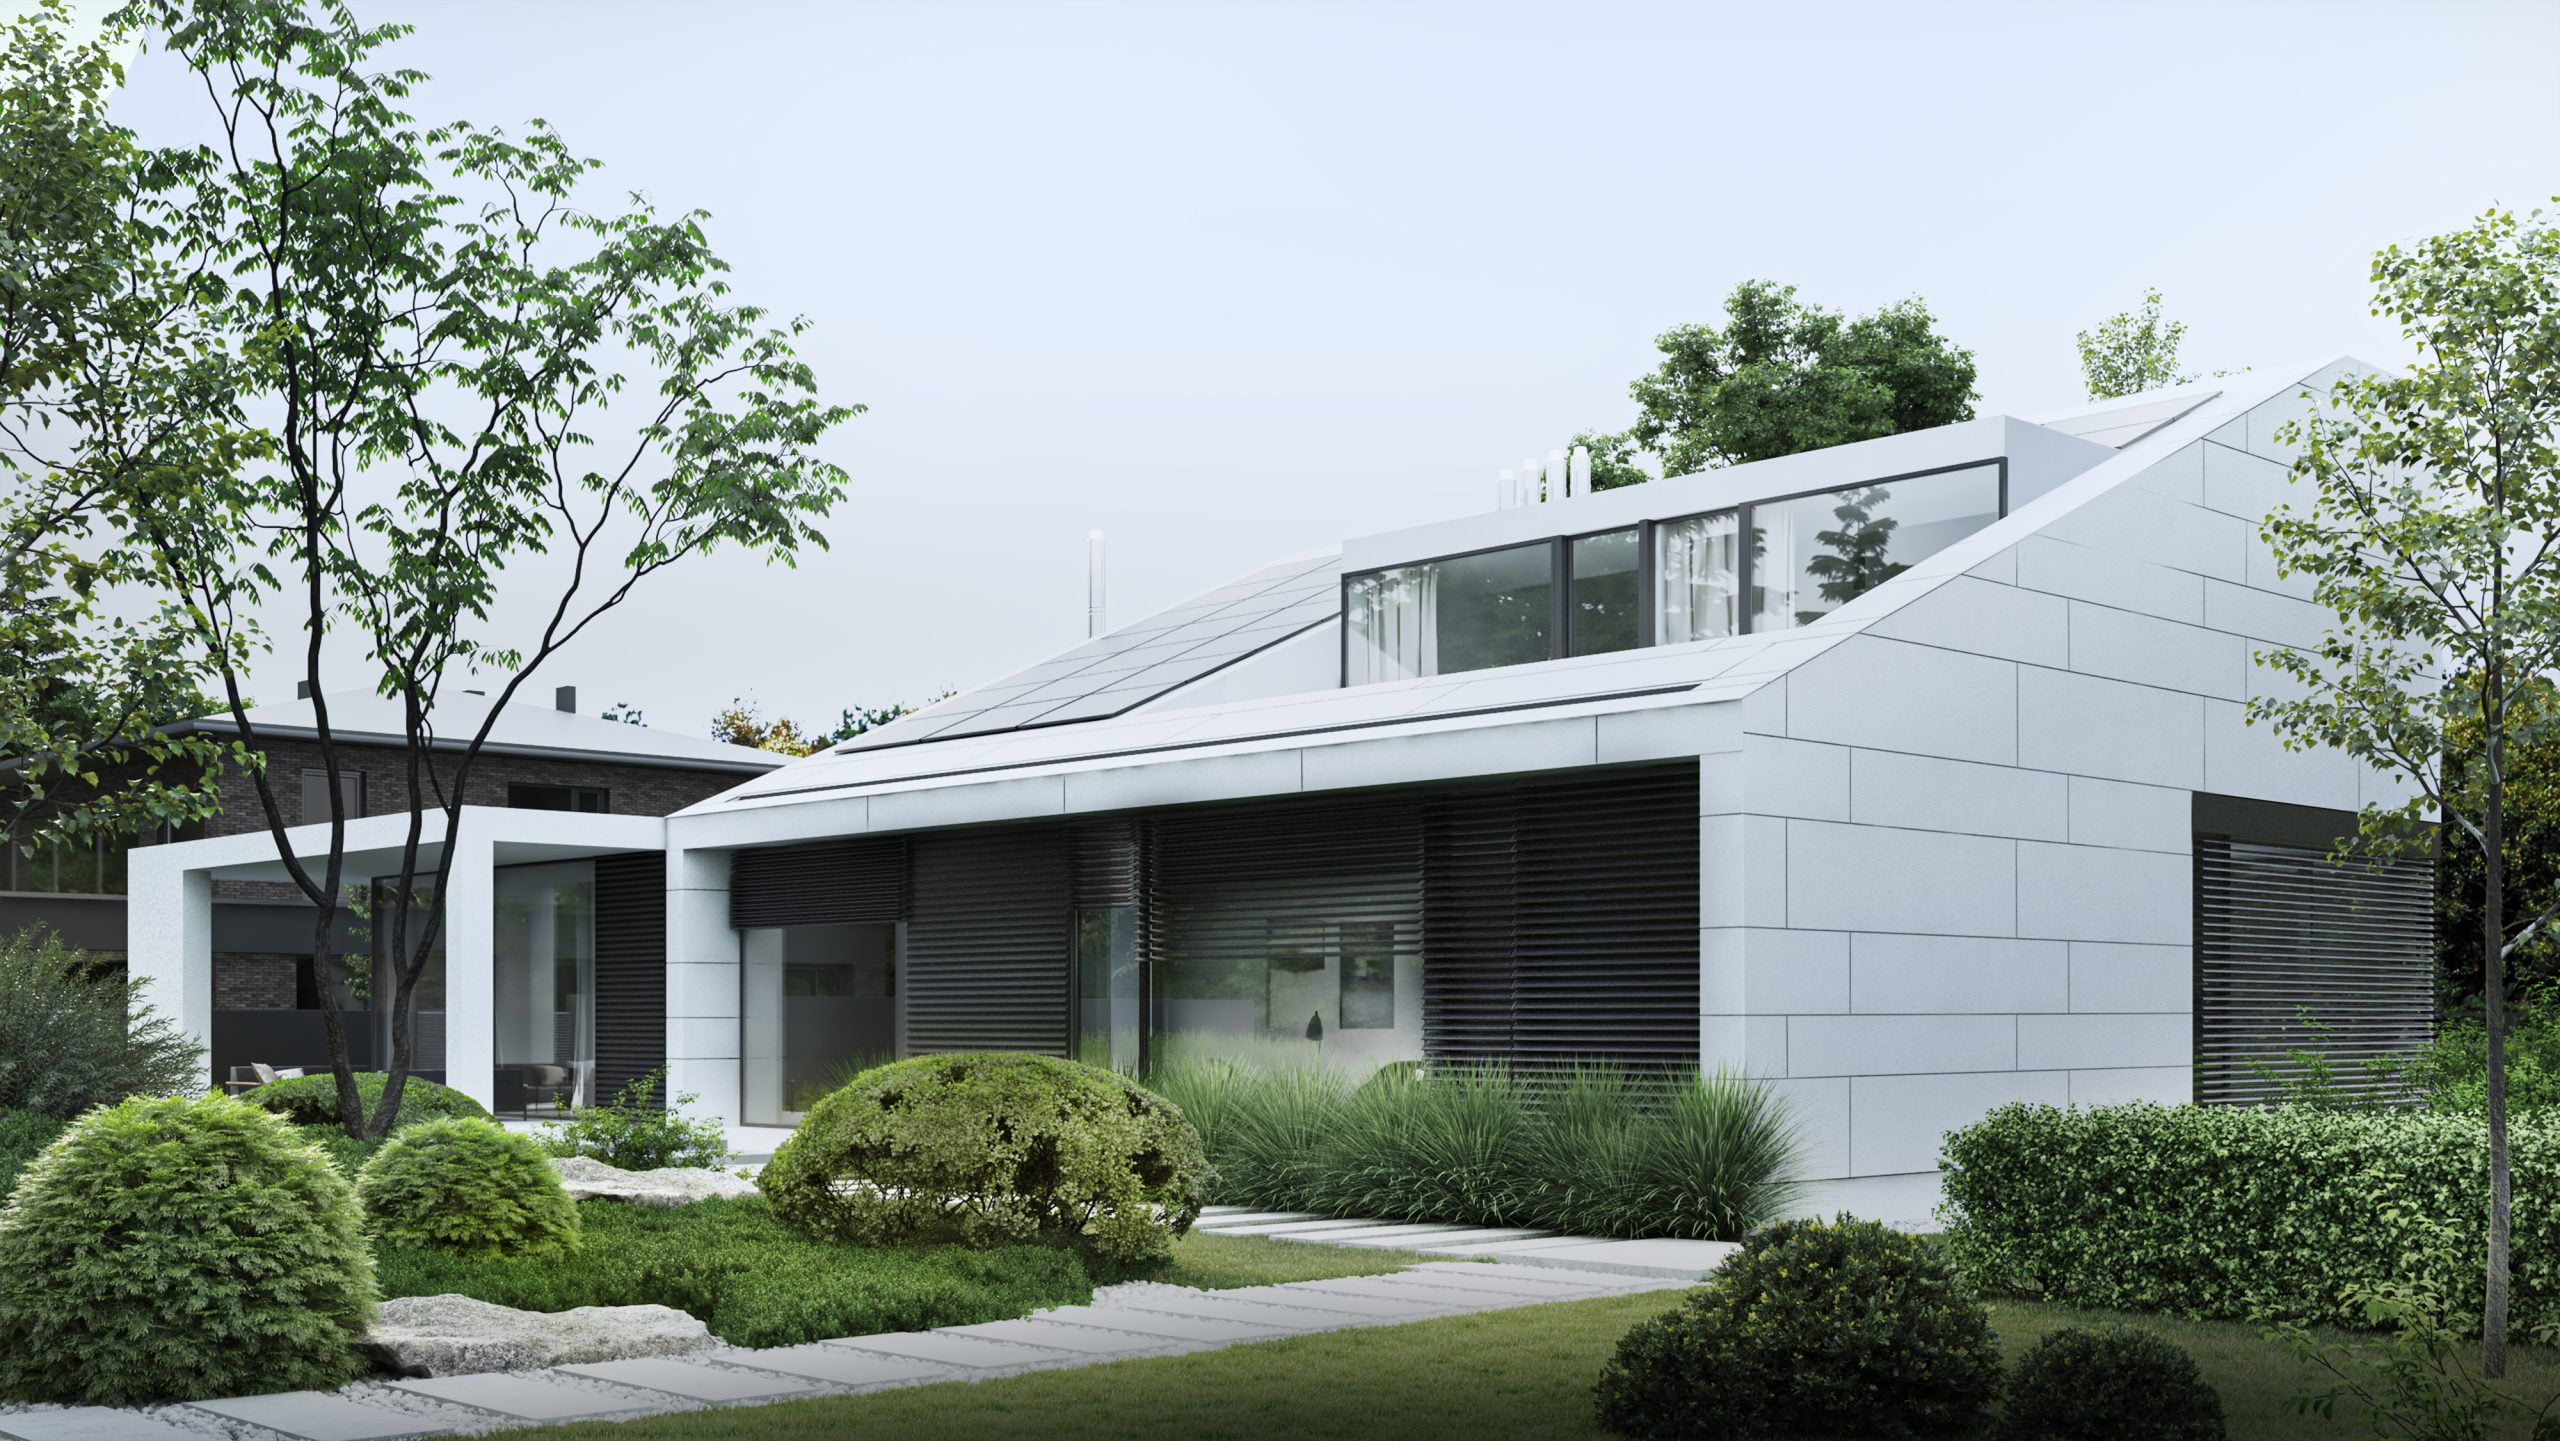 House with a Cut Roof - projekt Stoprocent Architekci